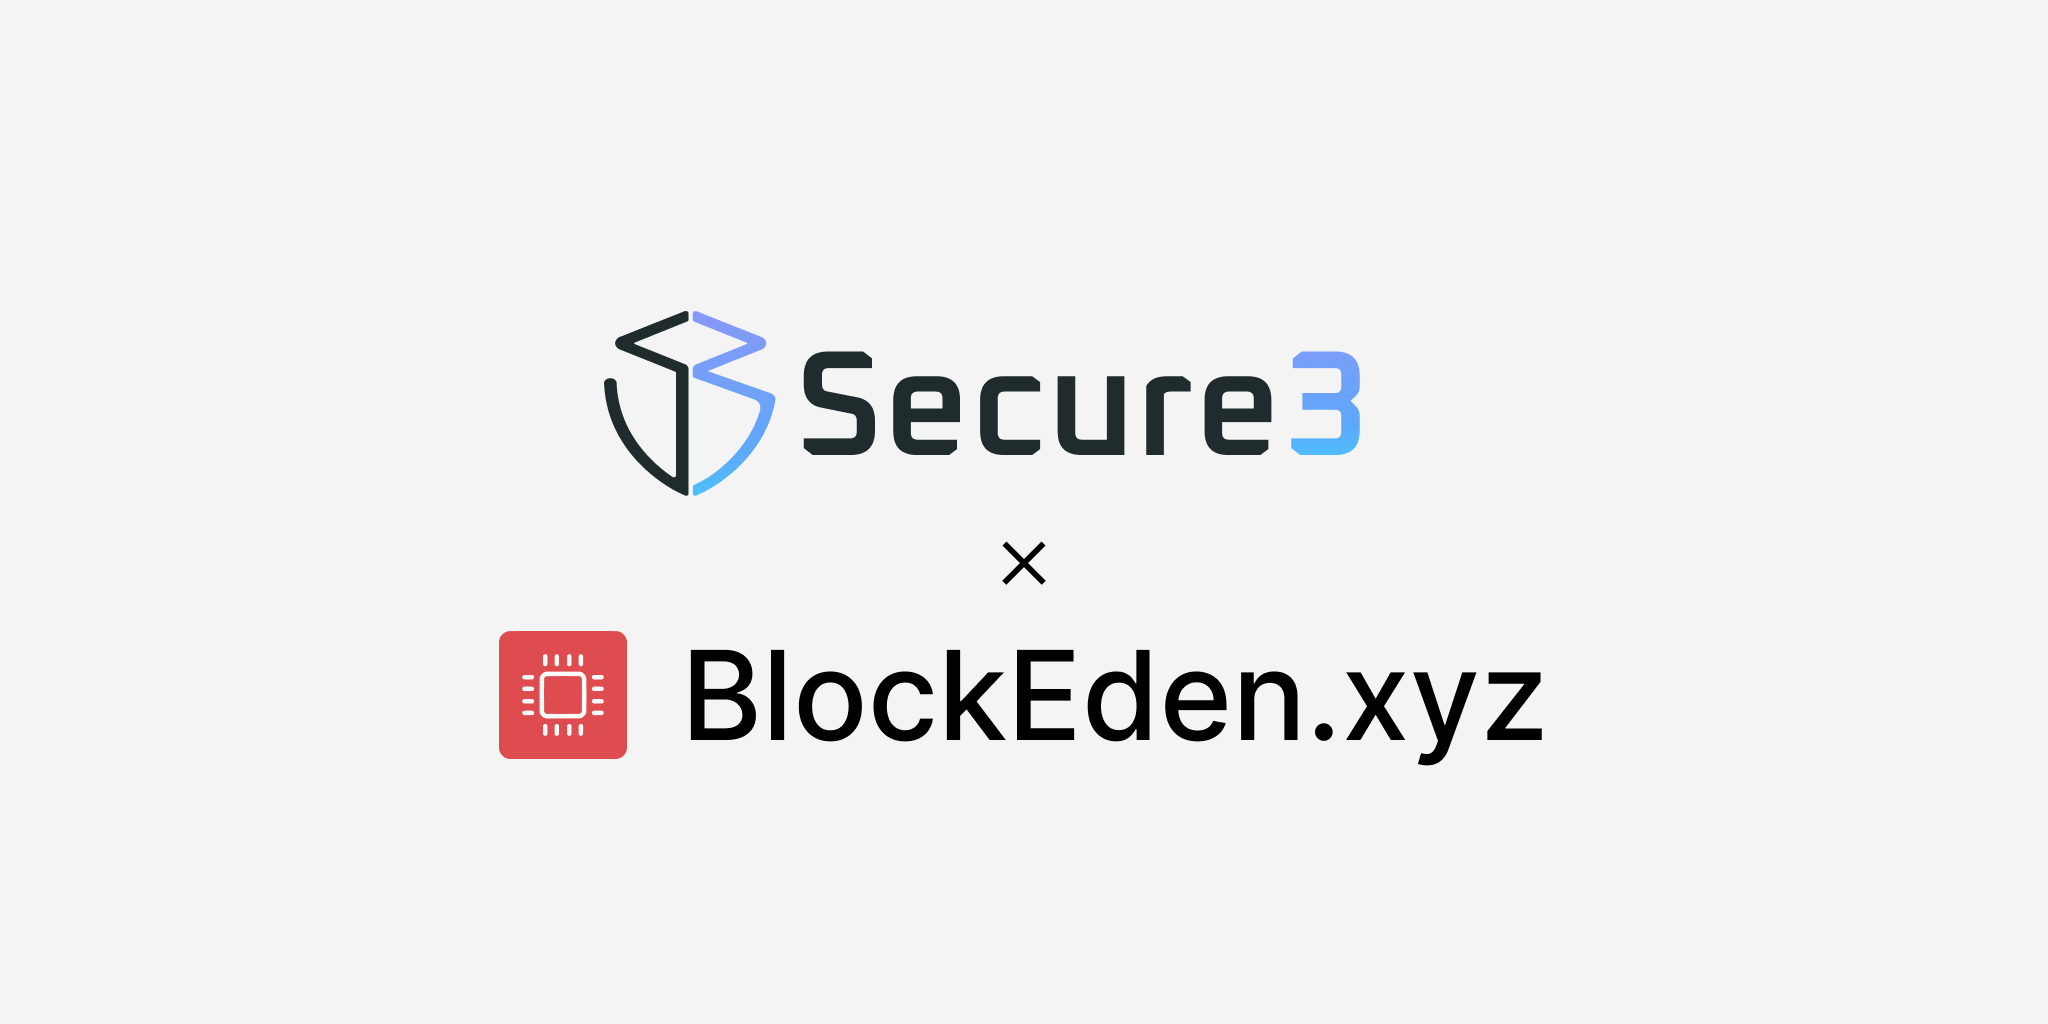 BlockEden.xyz Partners with Secure3